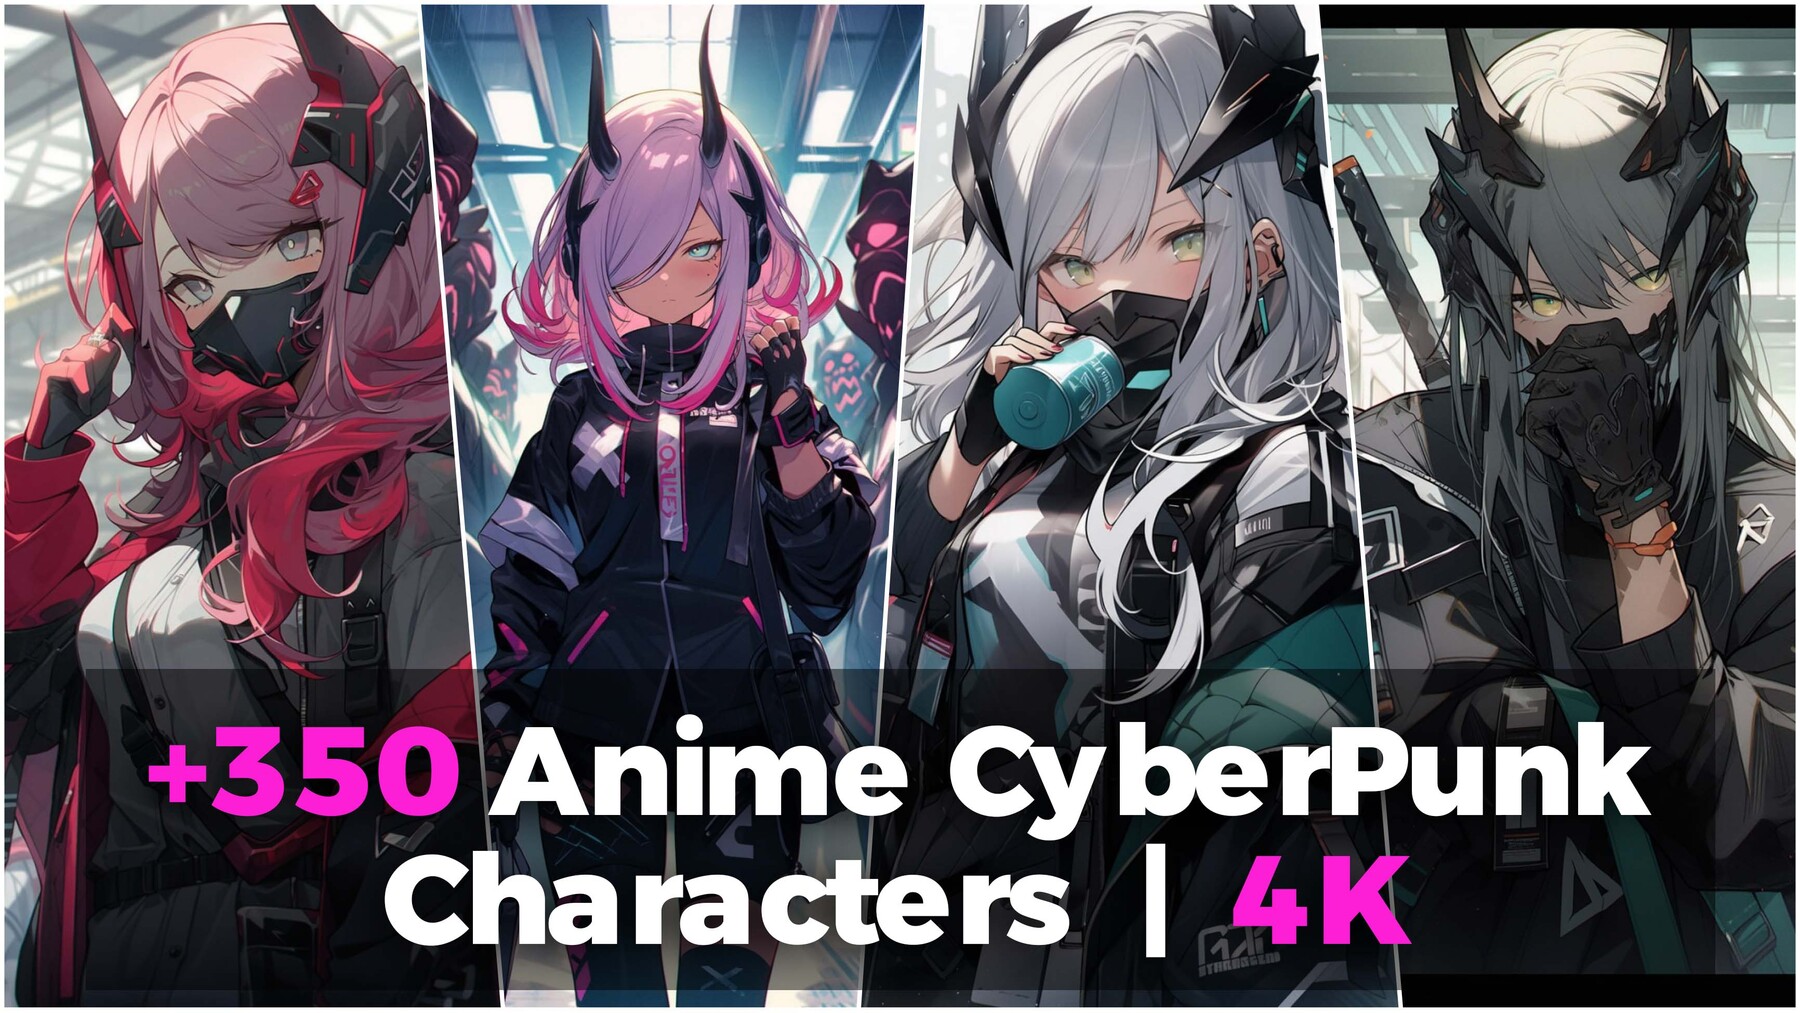 7 best anime like Cyberpunk: Edgerunners for fans to watch next - Polygon